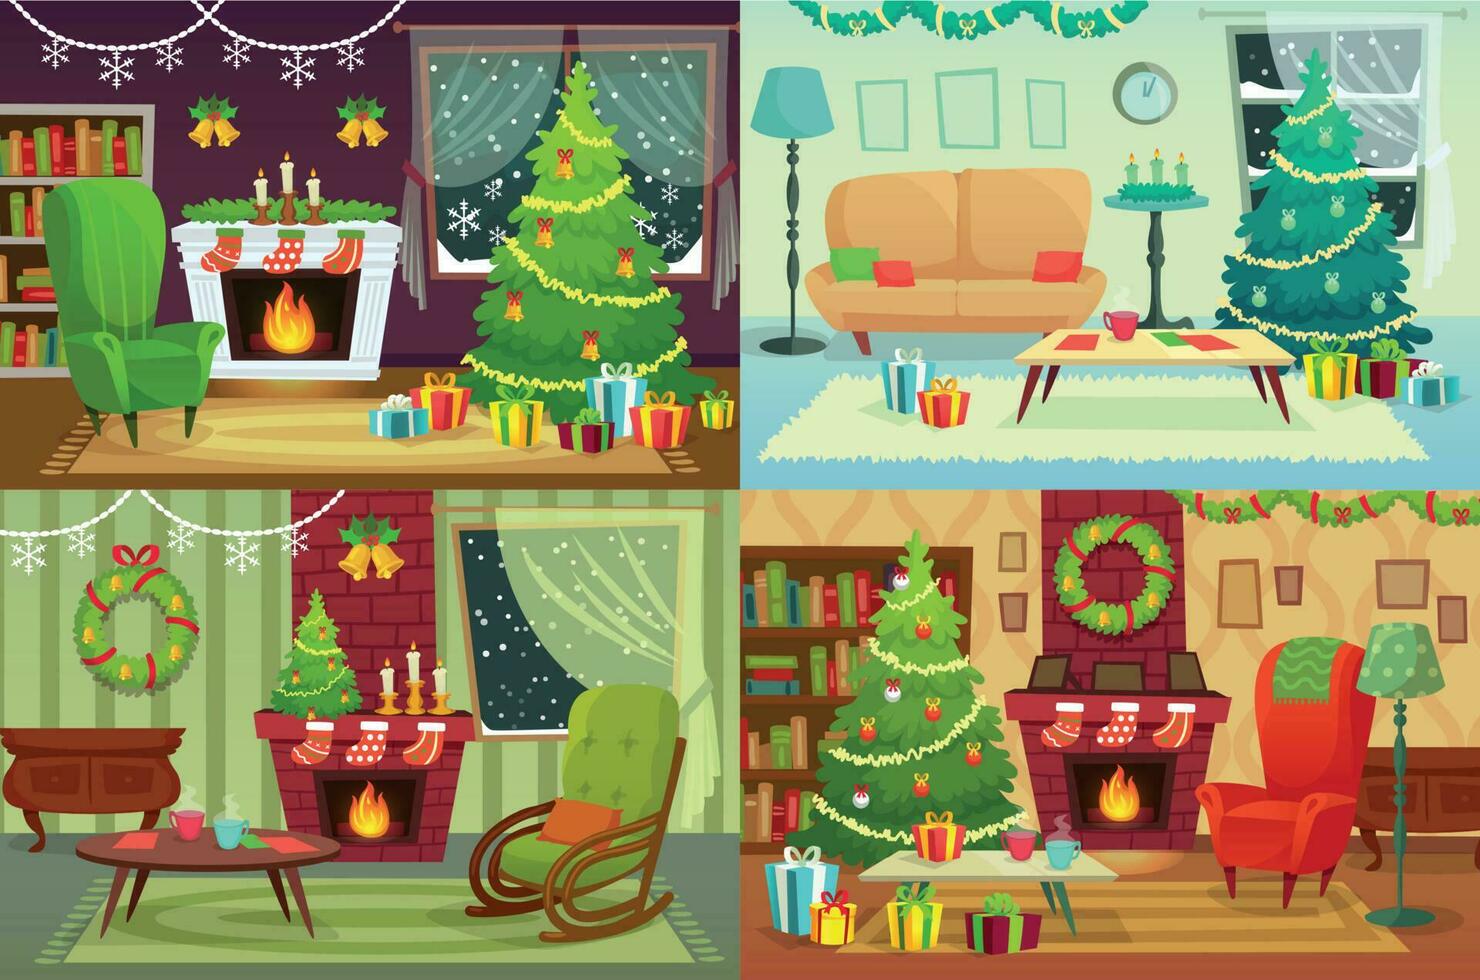 Christmas room interior. Xmas home decoration, Santa gifts under traditional tree and winter holiday house interior vector illustration